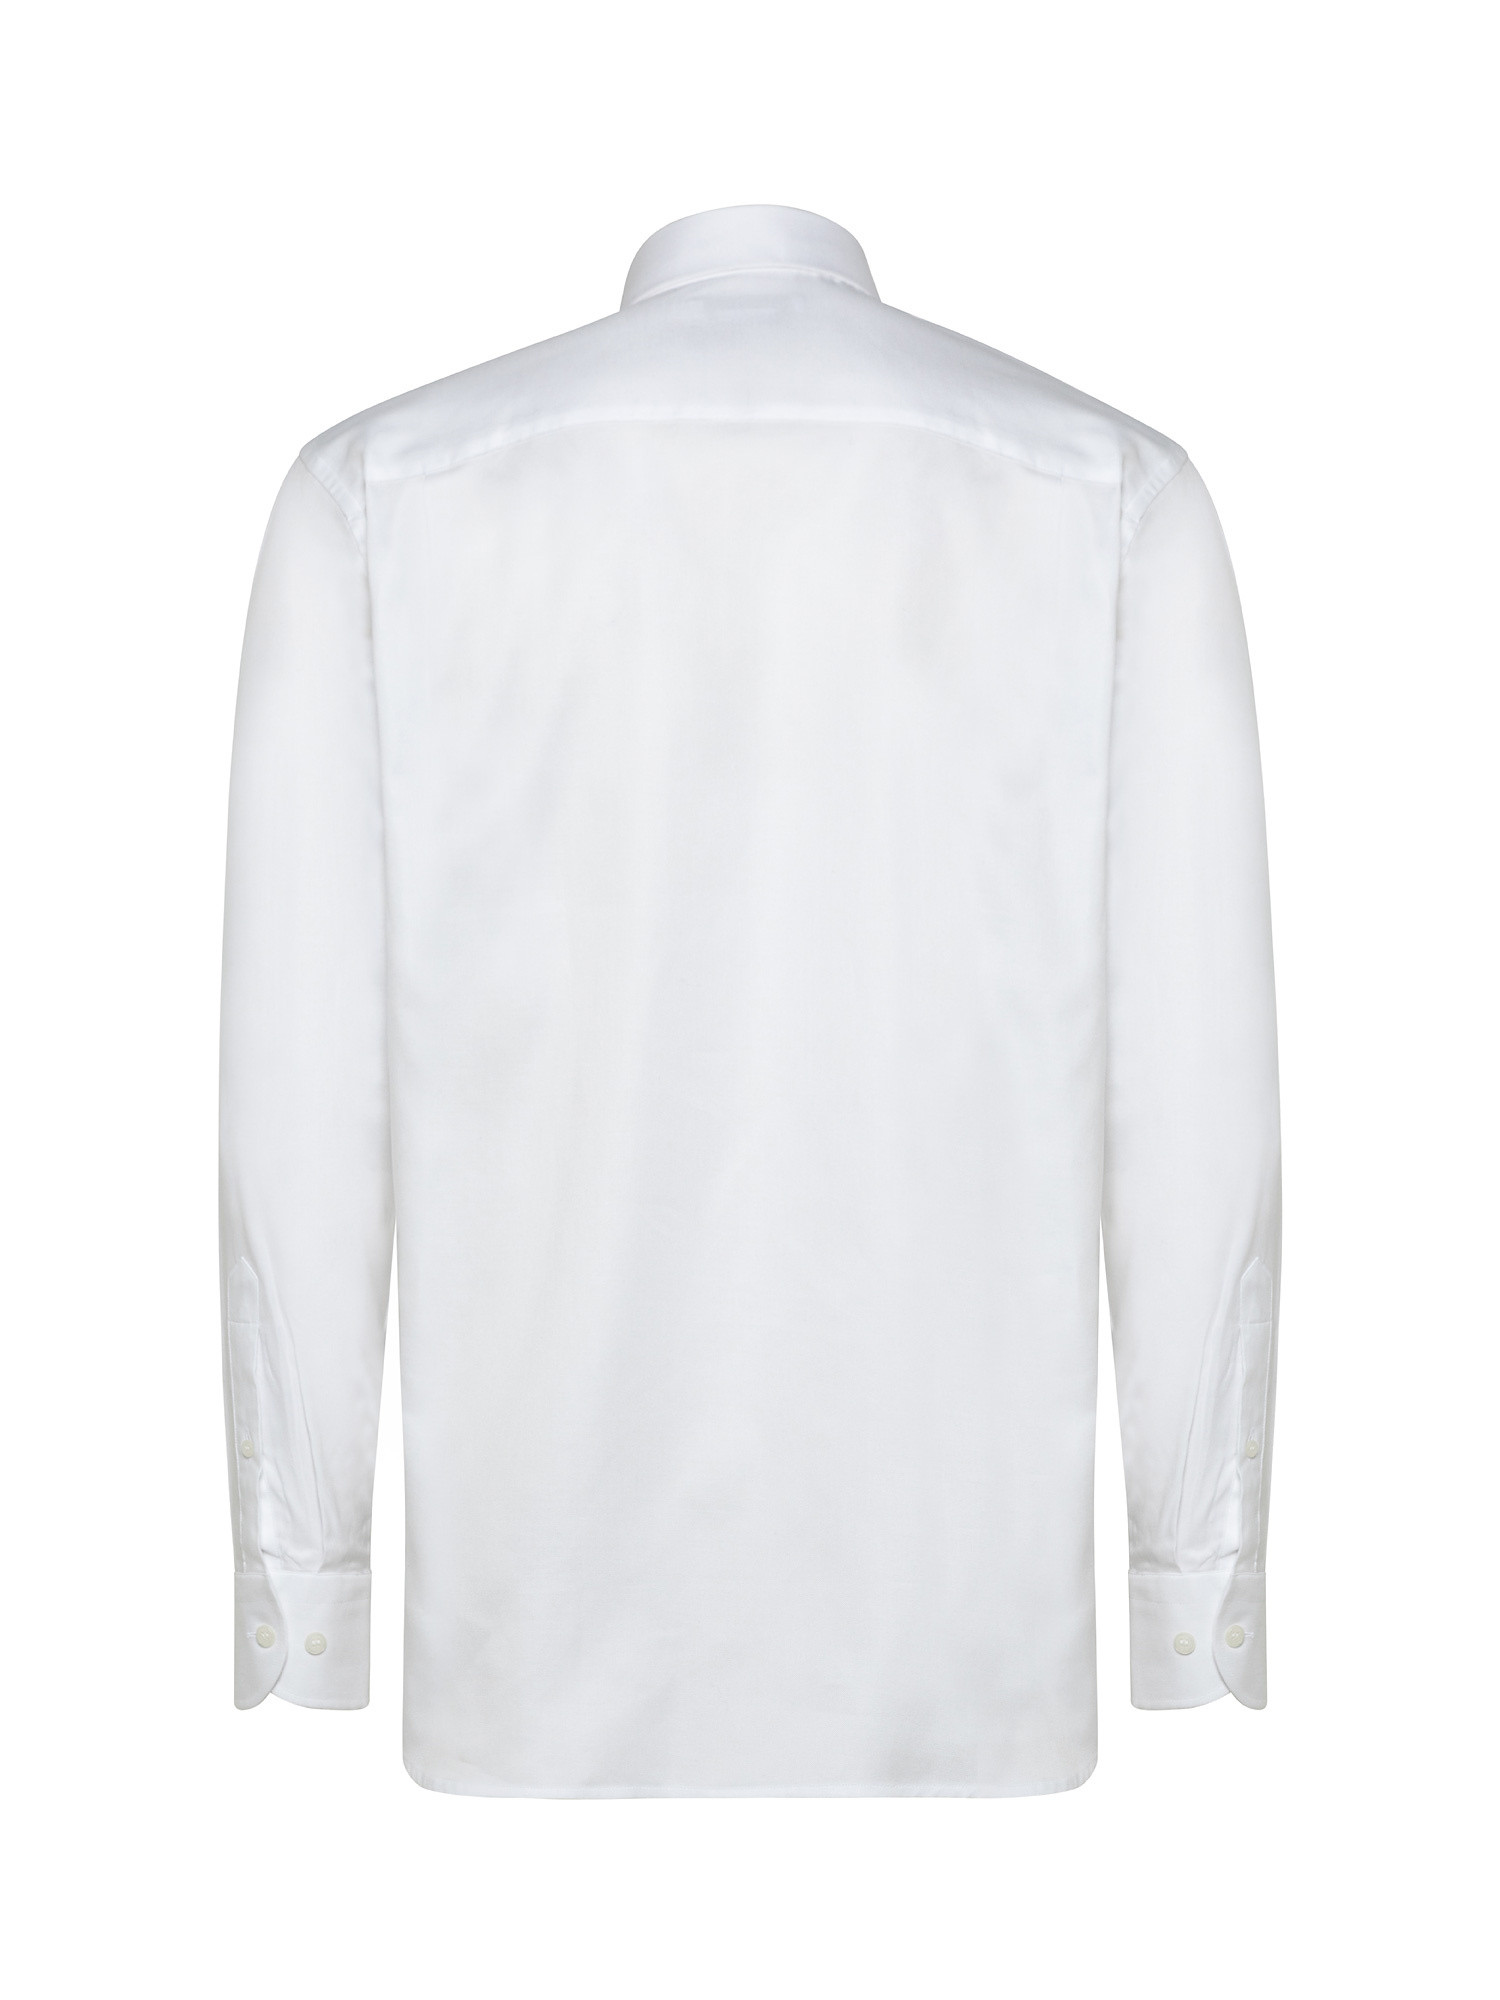 Camicia regular fit in cotone oxford, Bianco, large